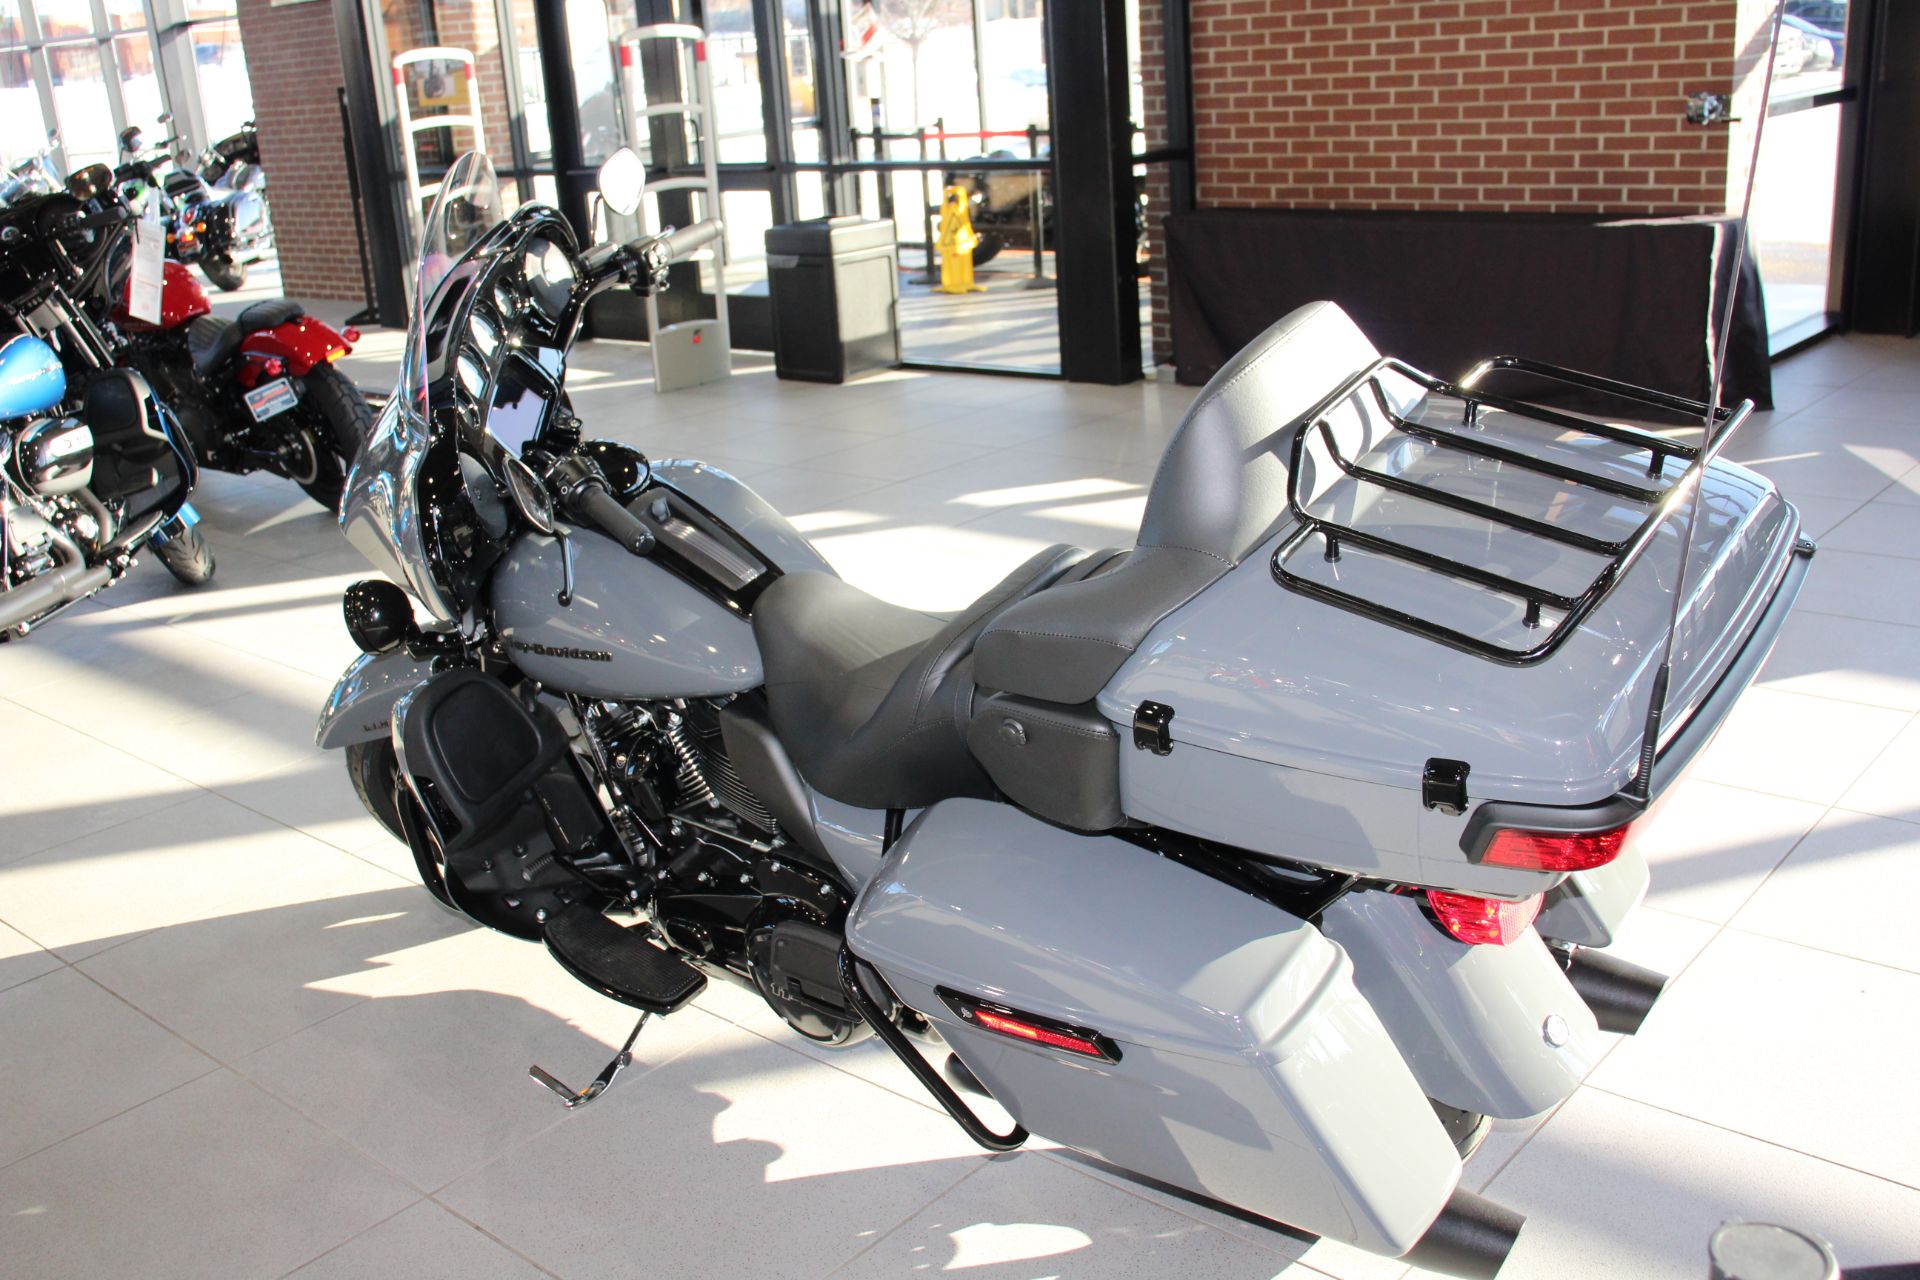 2022 Harley-Davidson Ultra Limited in Flint, Michigan - Photo 11